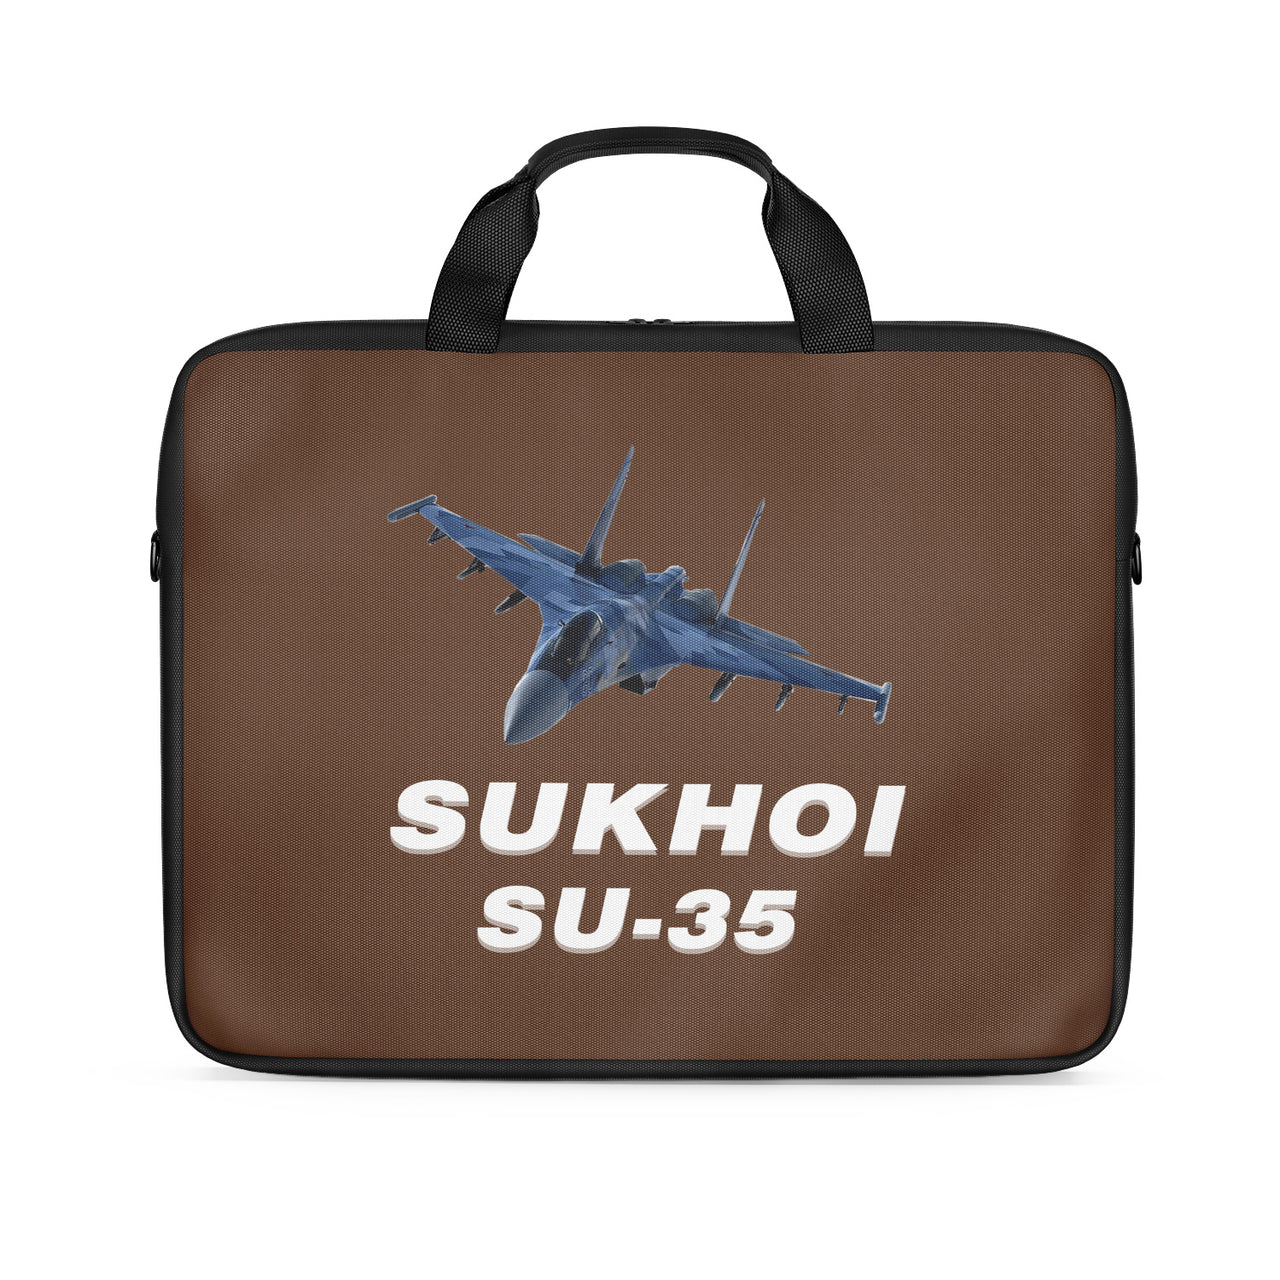 The Sukhoi SU-35 Designed Laptop & Tablet Bags